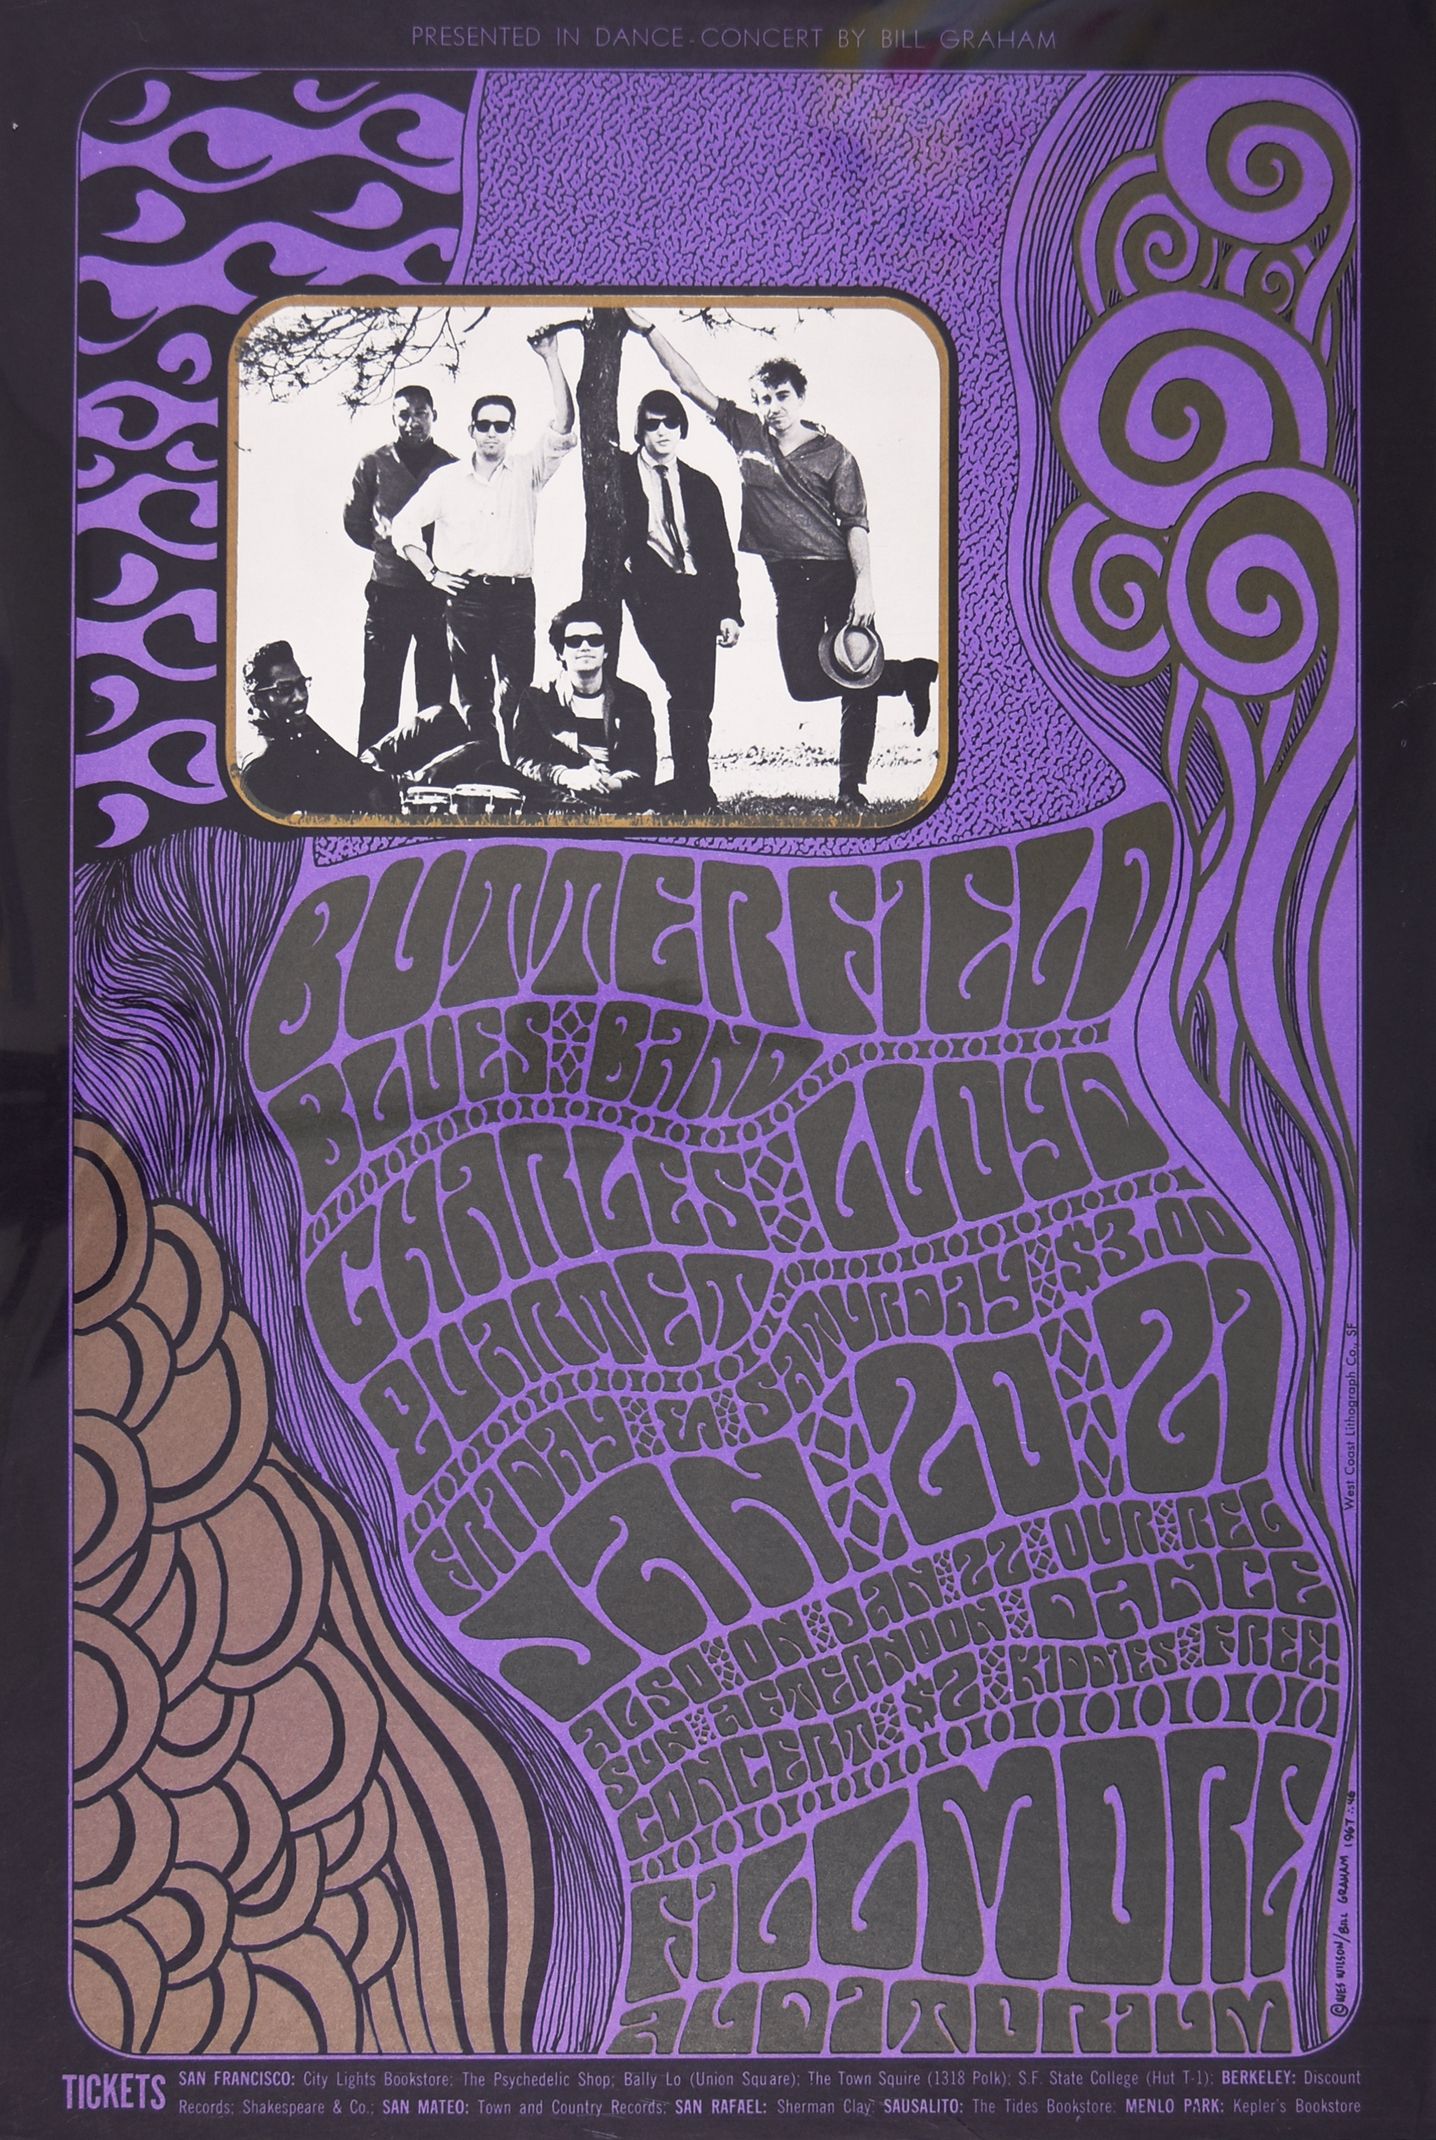 BG-46-OP-1 Butterfield Blues Band The Fillmore 1967 Concert Poster